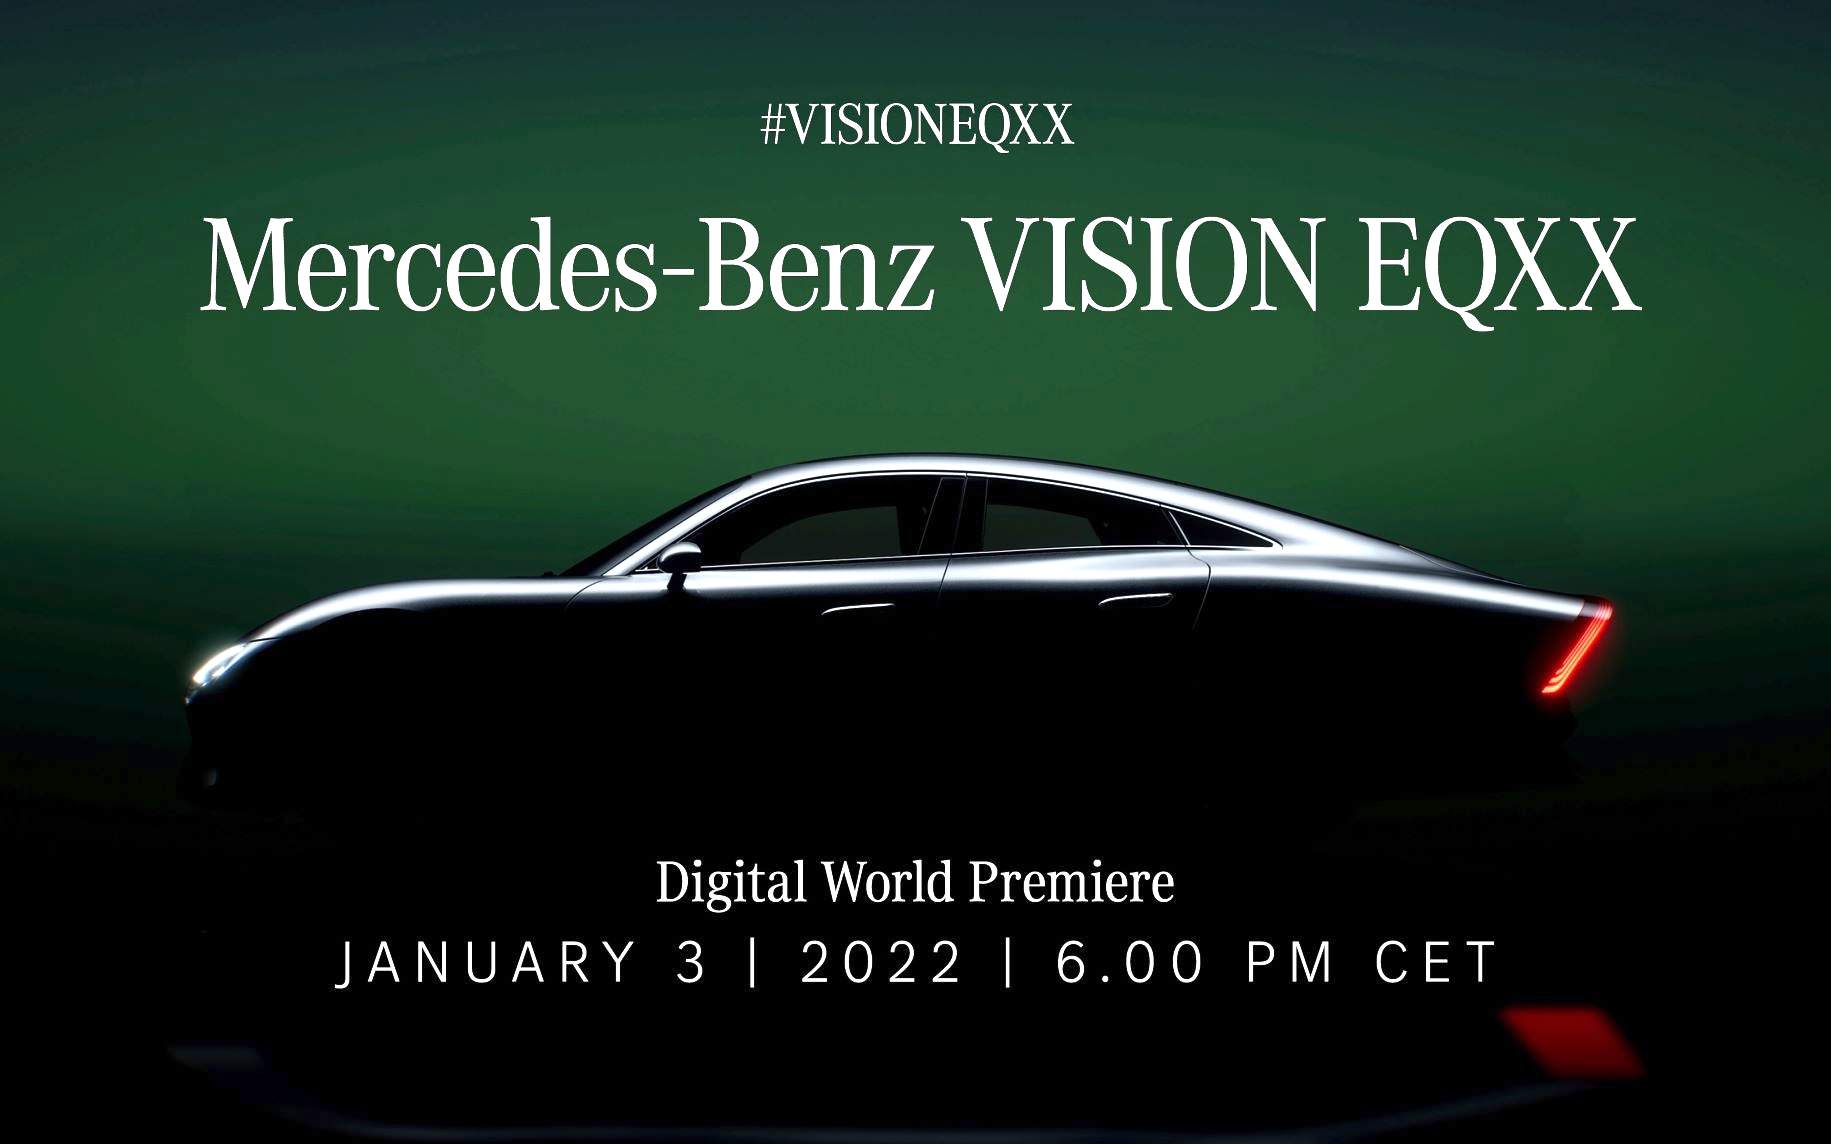 Mercedes-Benz Vision EQXX super-efficient EV to debut January 3